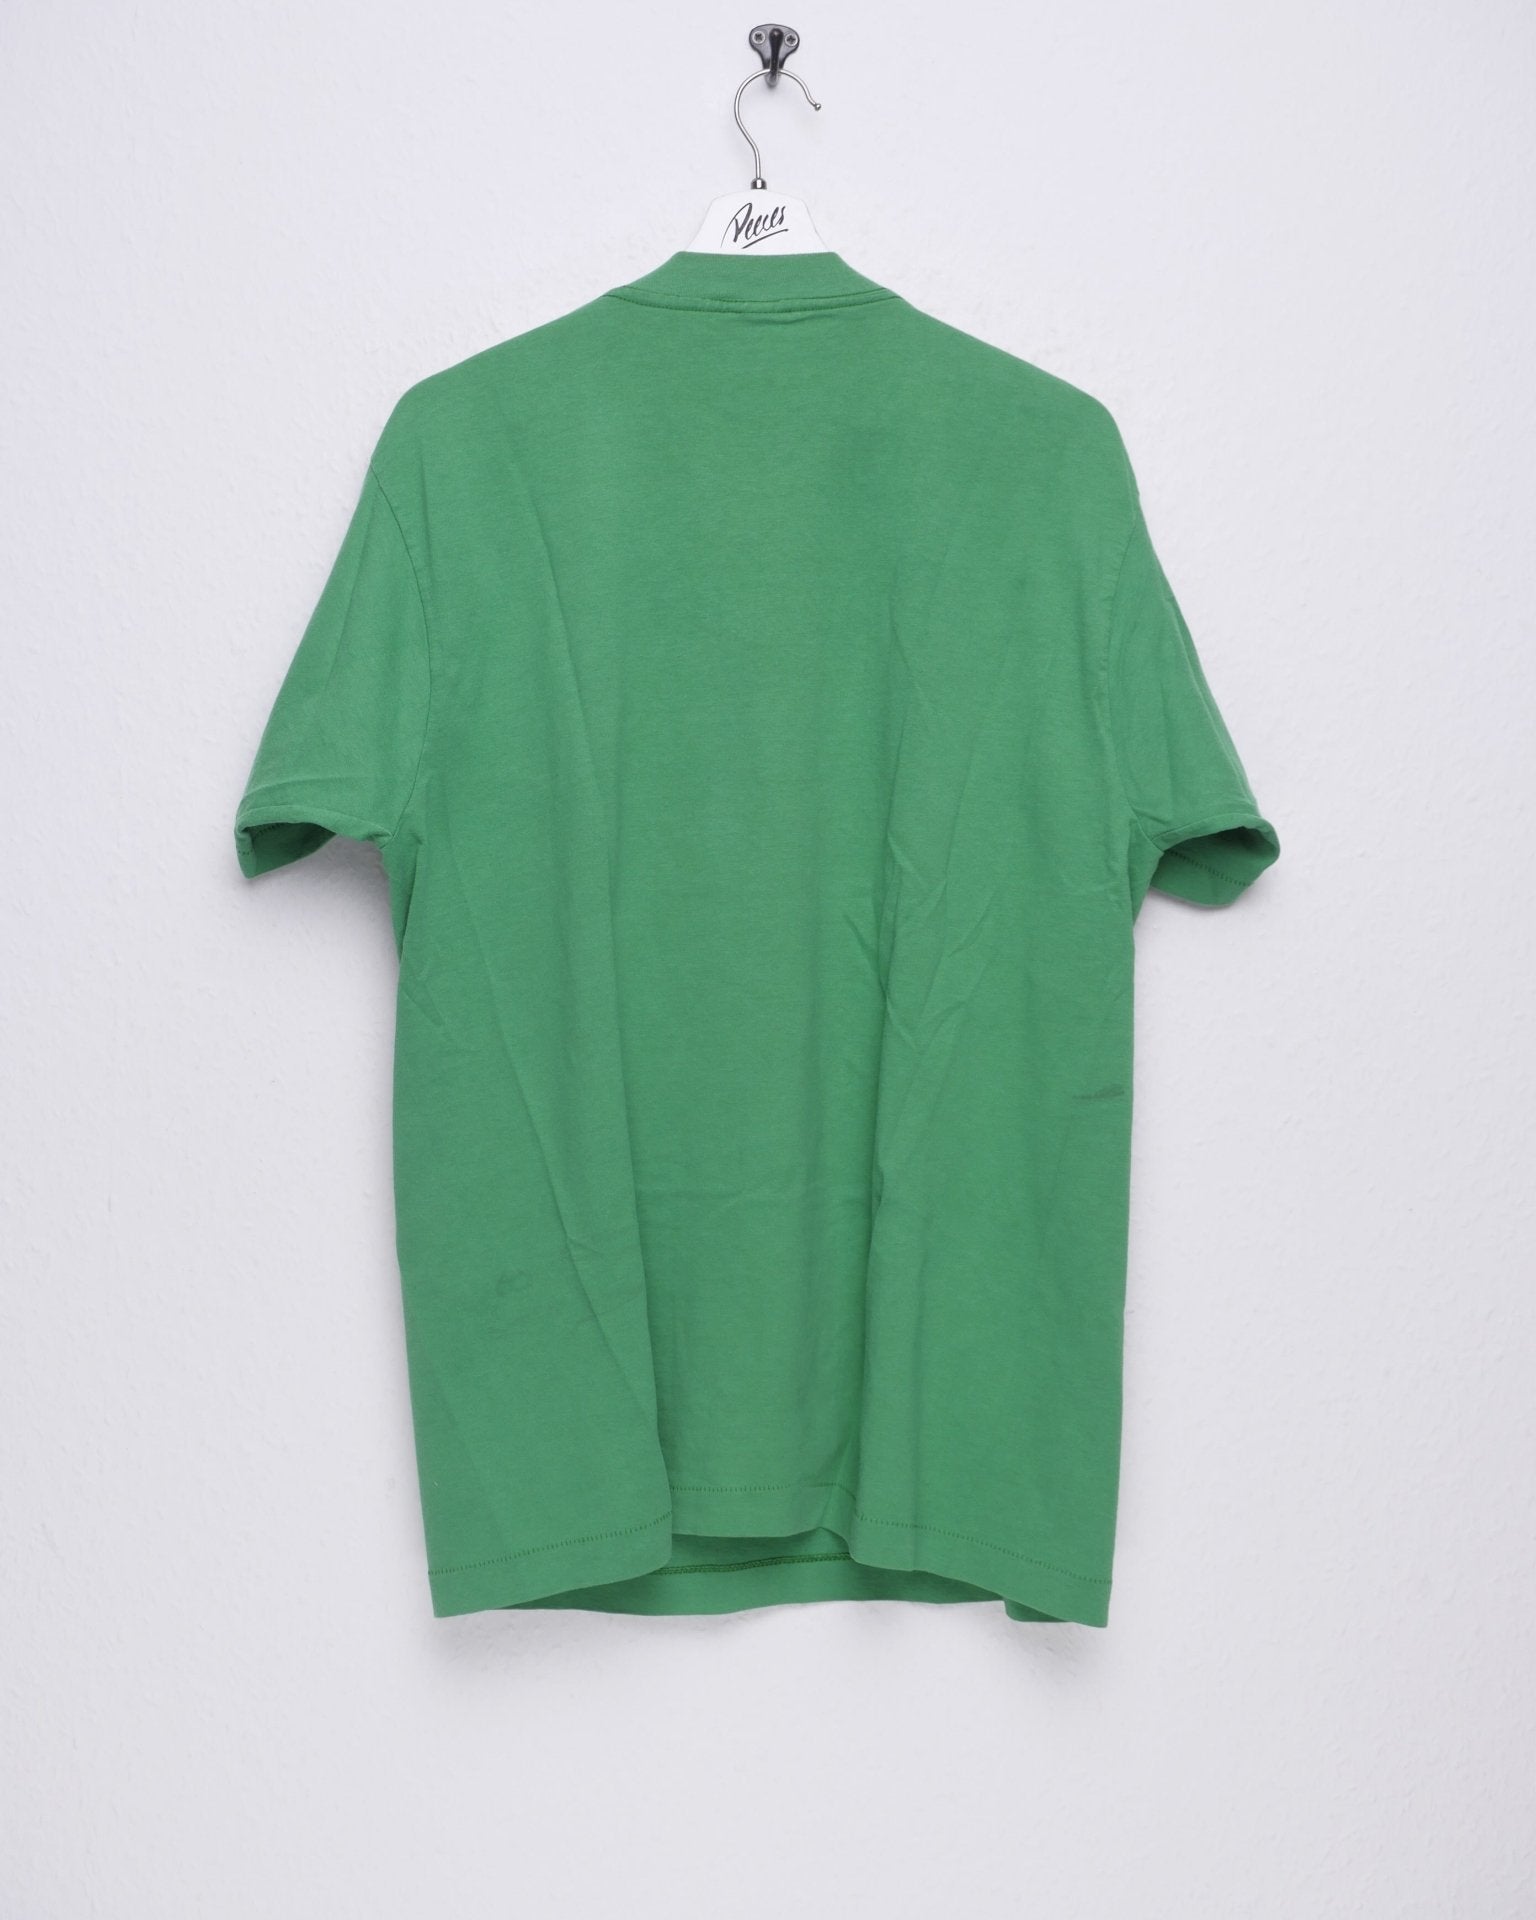 Connecticut Irish Festival printed Graphic green Shirt - Peeces